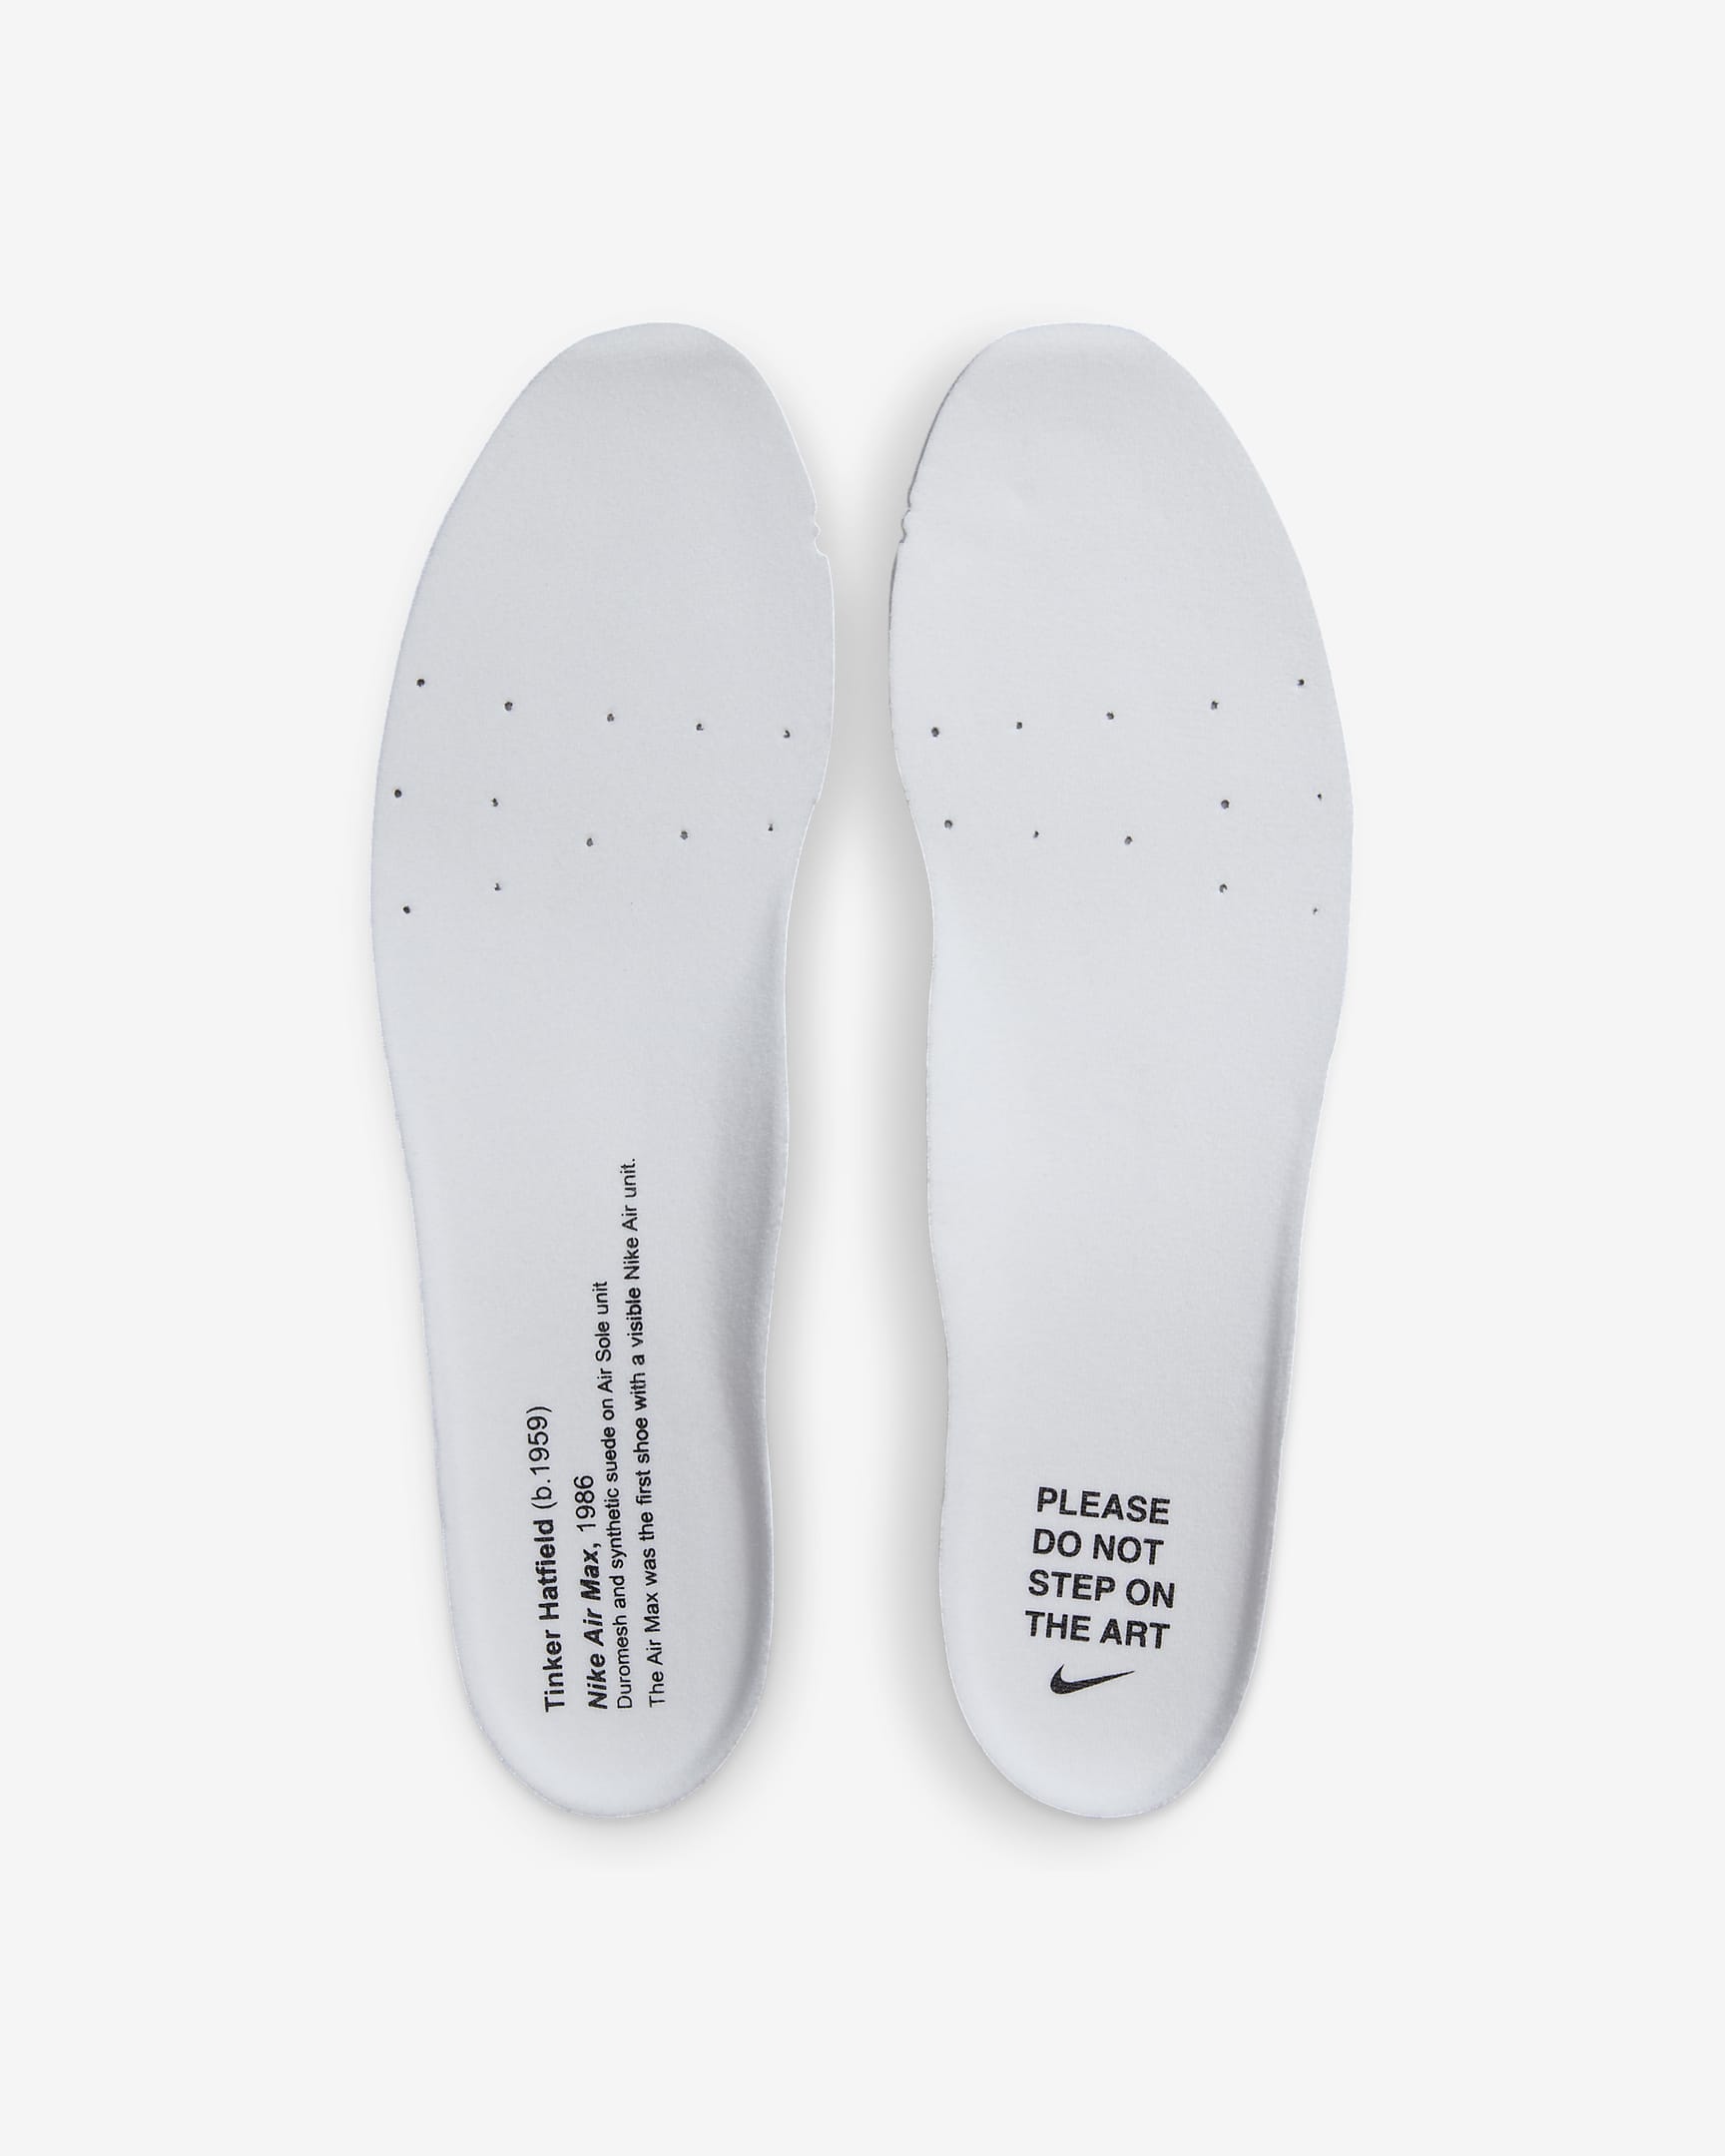 Nike Air Max 1 '86 OG Men's Shoes - Summit White/Photon Dust/Black/Phantom